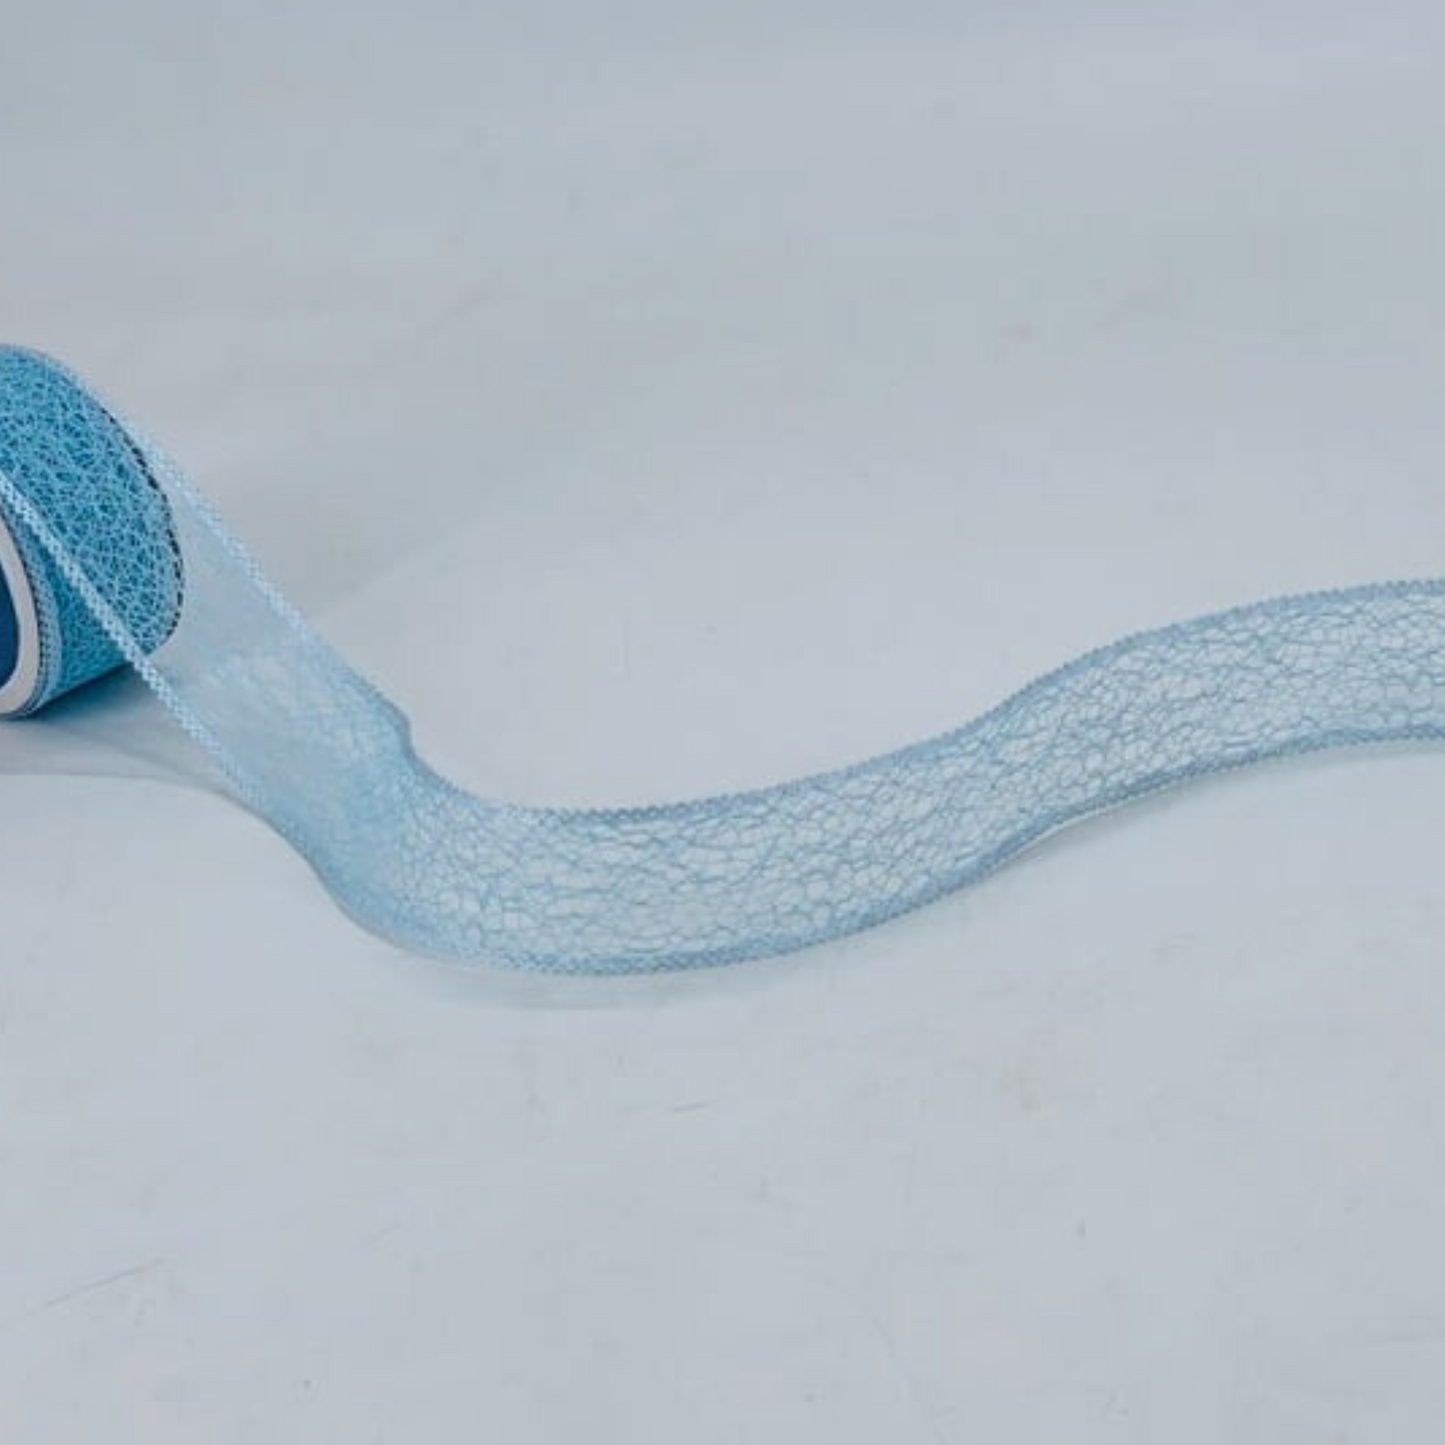 Mesh Ribbon with Scalloped Edges - Blue - 1 metre